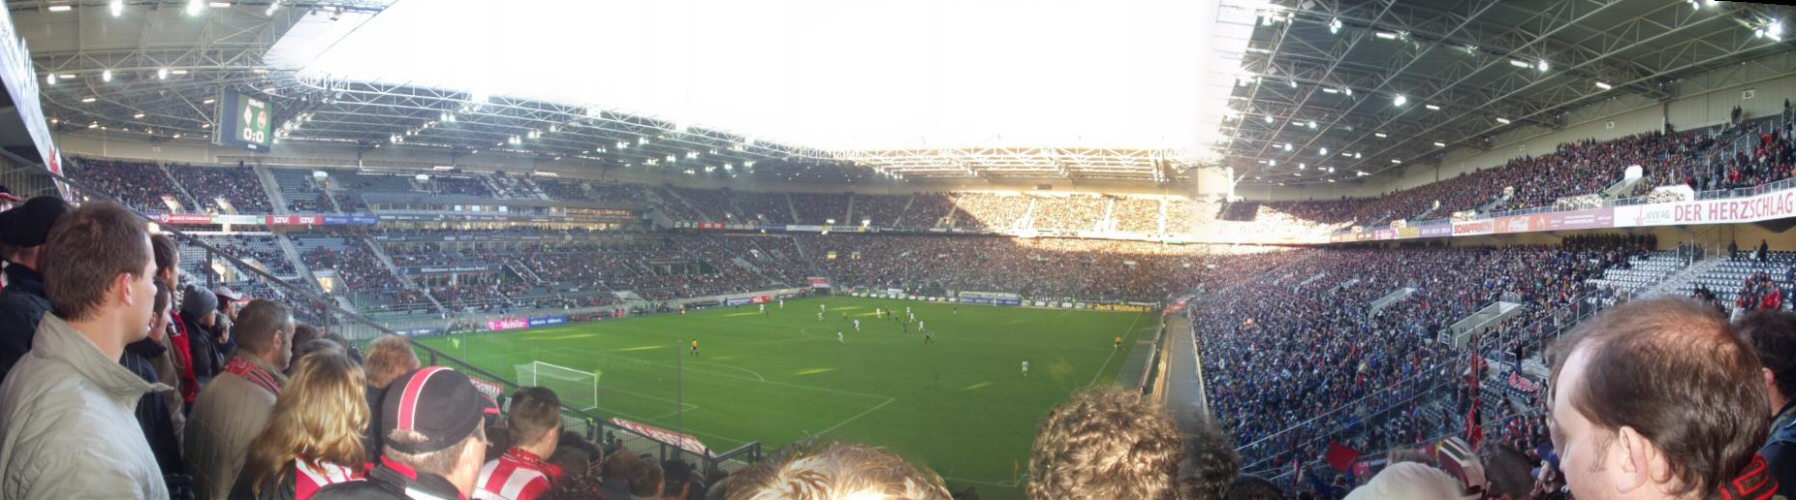 Stadion im Borussia-Park in Gladbach